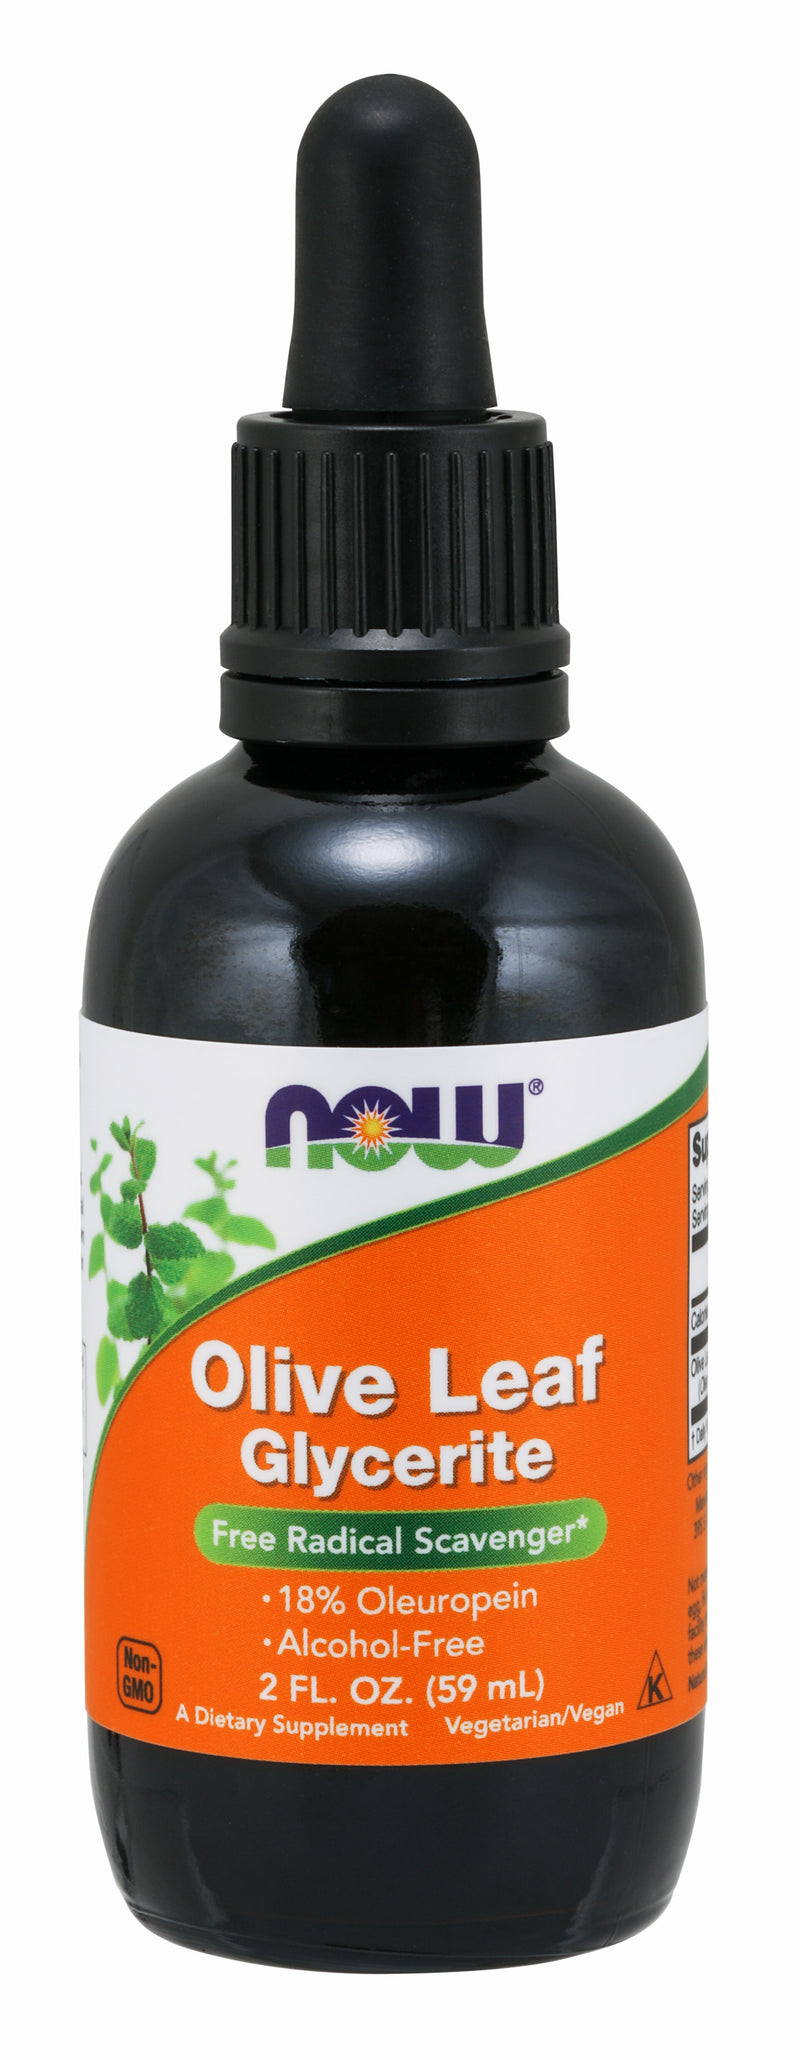 Olive Leaf Glycerite 2 fl oz (60 ml)